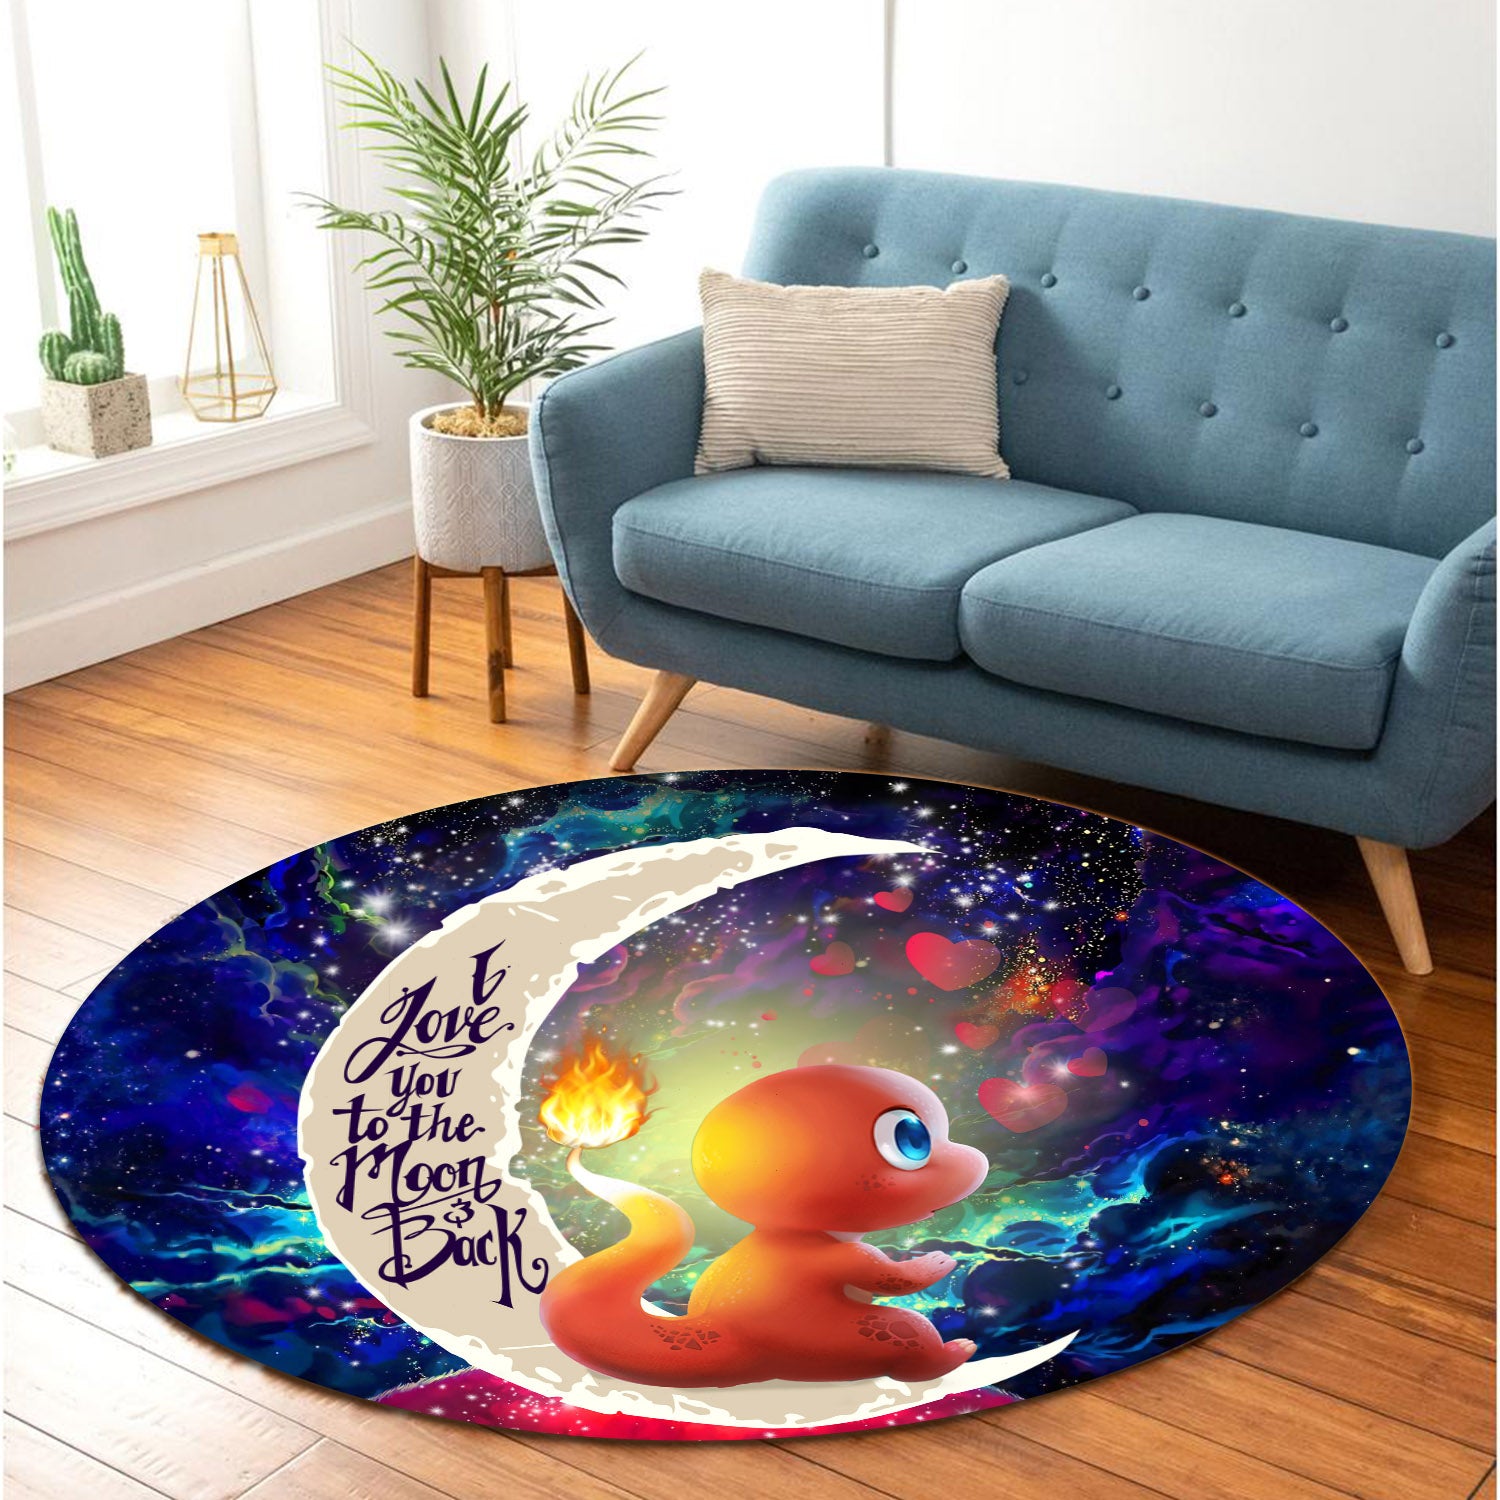 Cute Charmander Pokemon Love You To The Moon Galaxy Round Carpet Rug Bedroom Livingroom Home Decor Nearkii